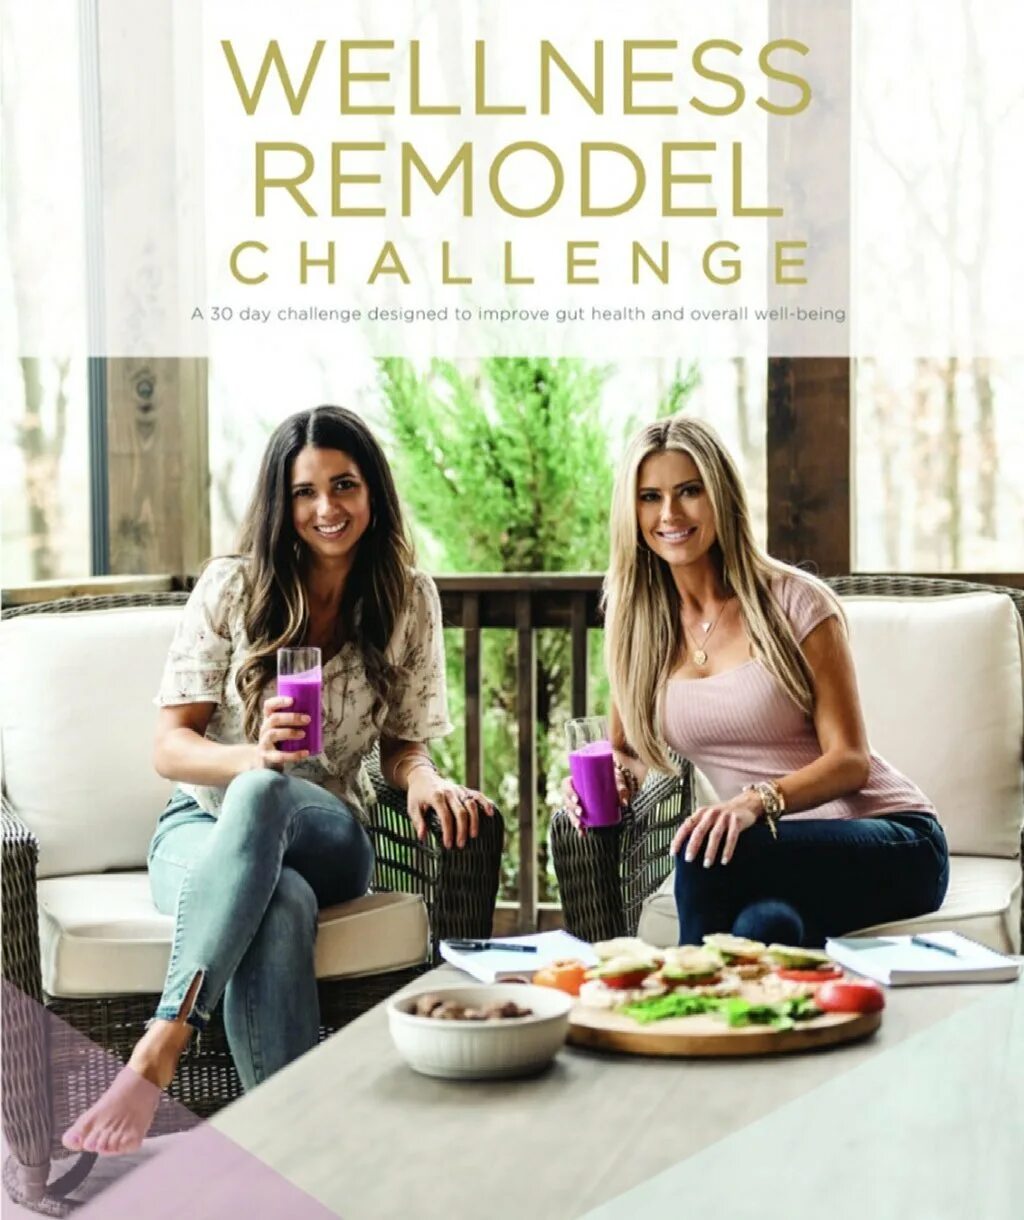 Christina Haack в Instagram: "The 30 day wellness remodel challenge is...